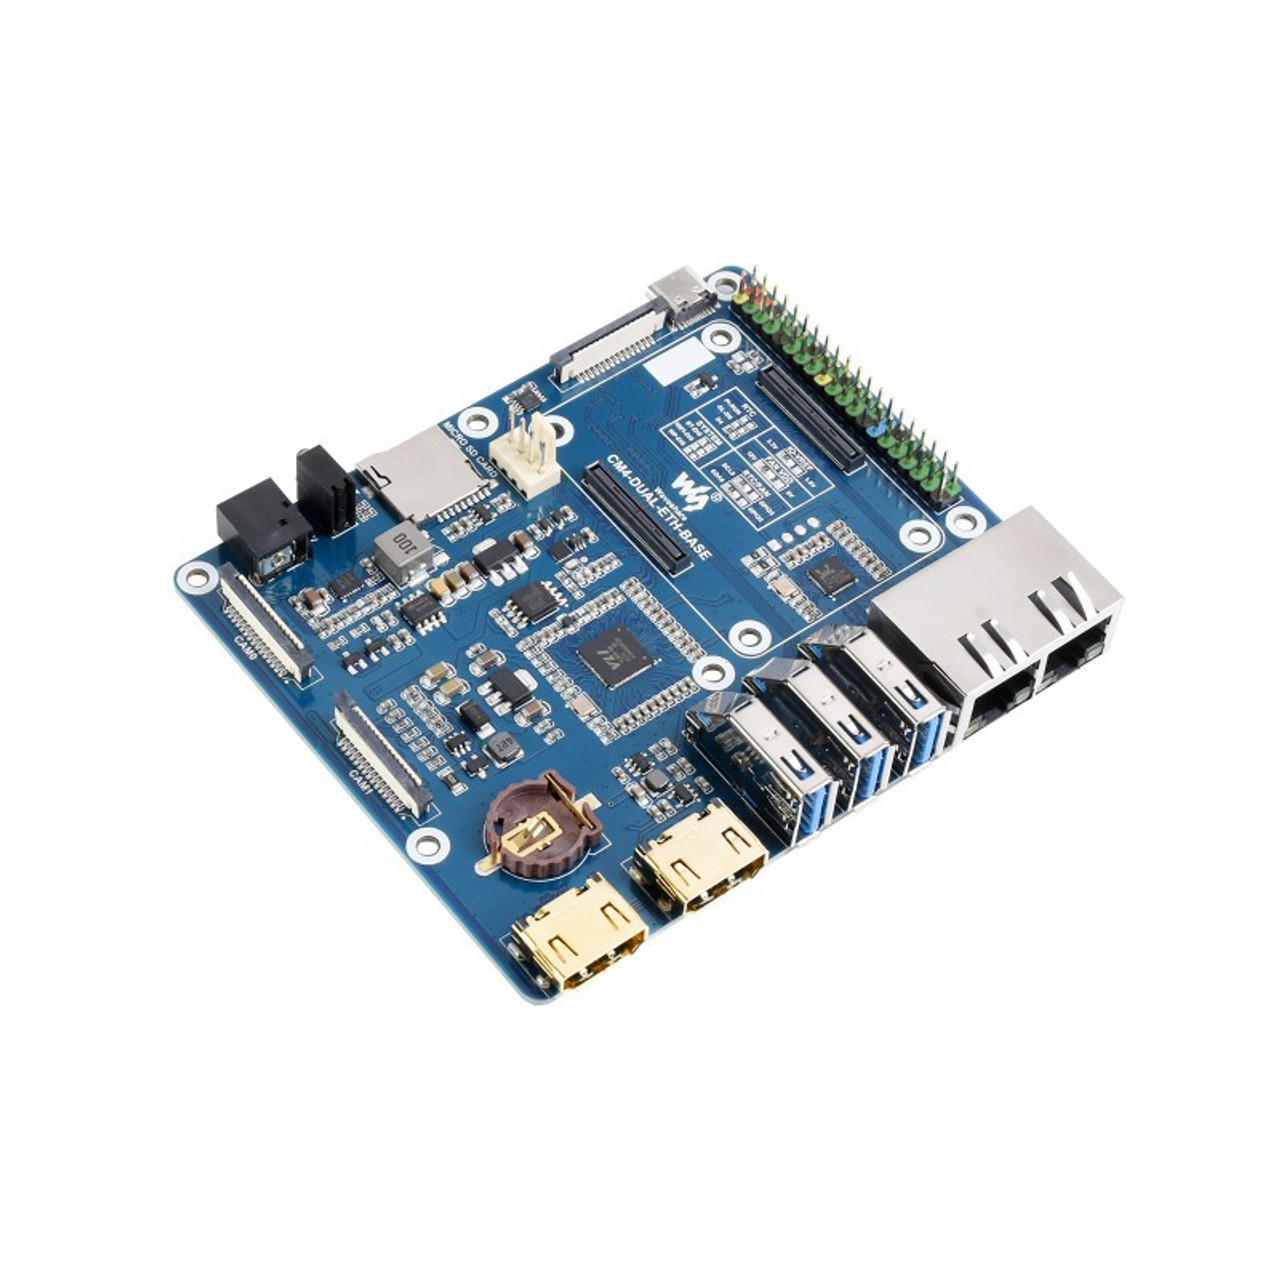 Dual Gigabit Ethernet Base Board Designed for Raspberry Pi CM4 